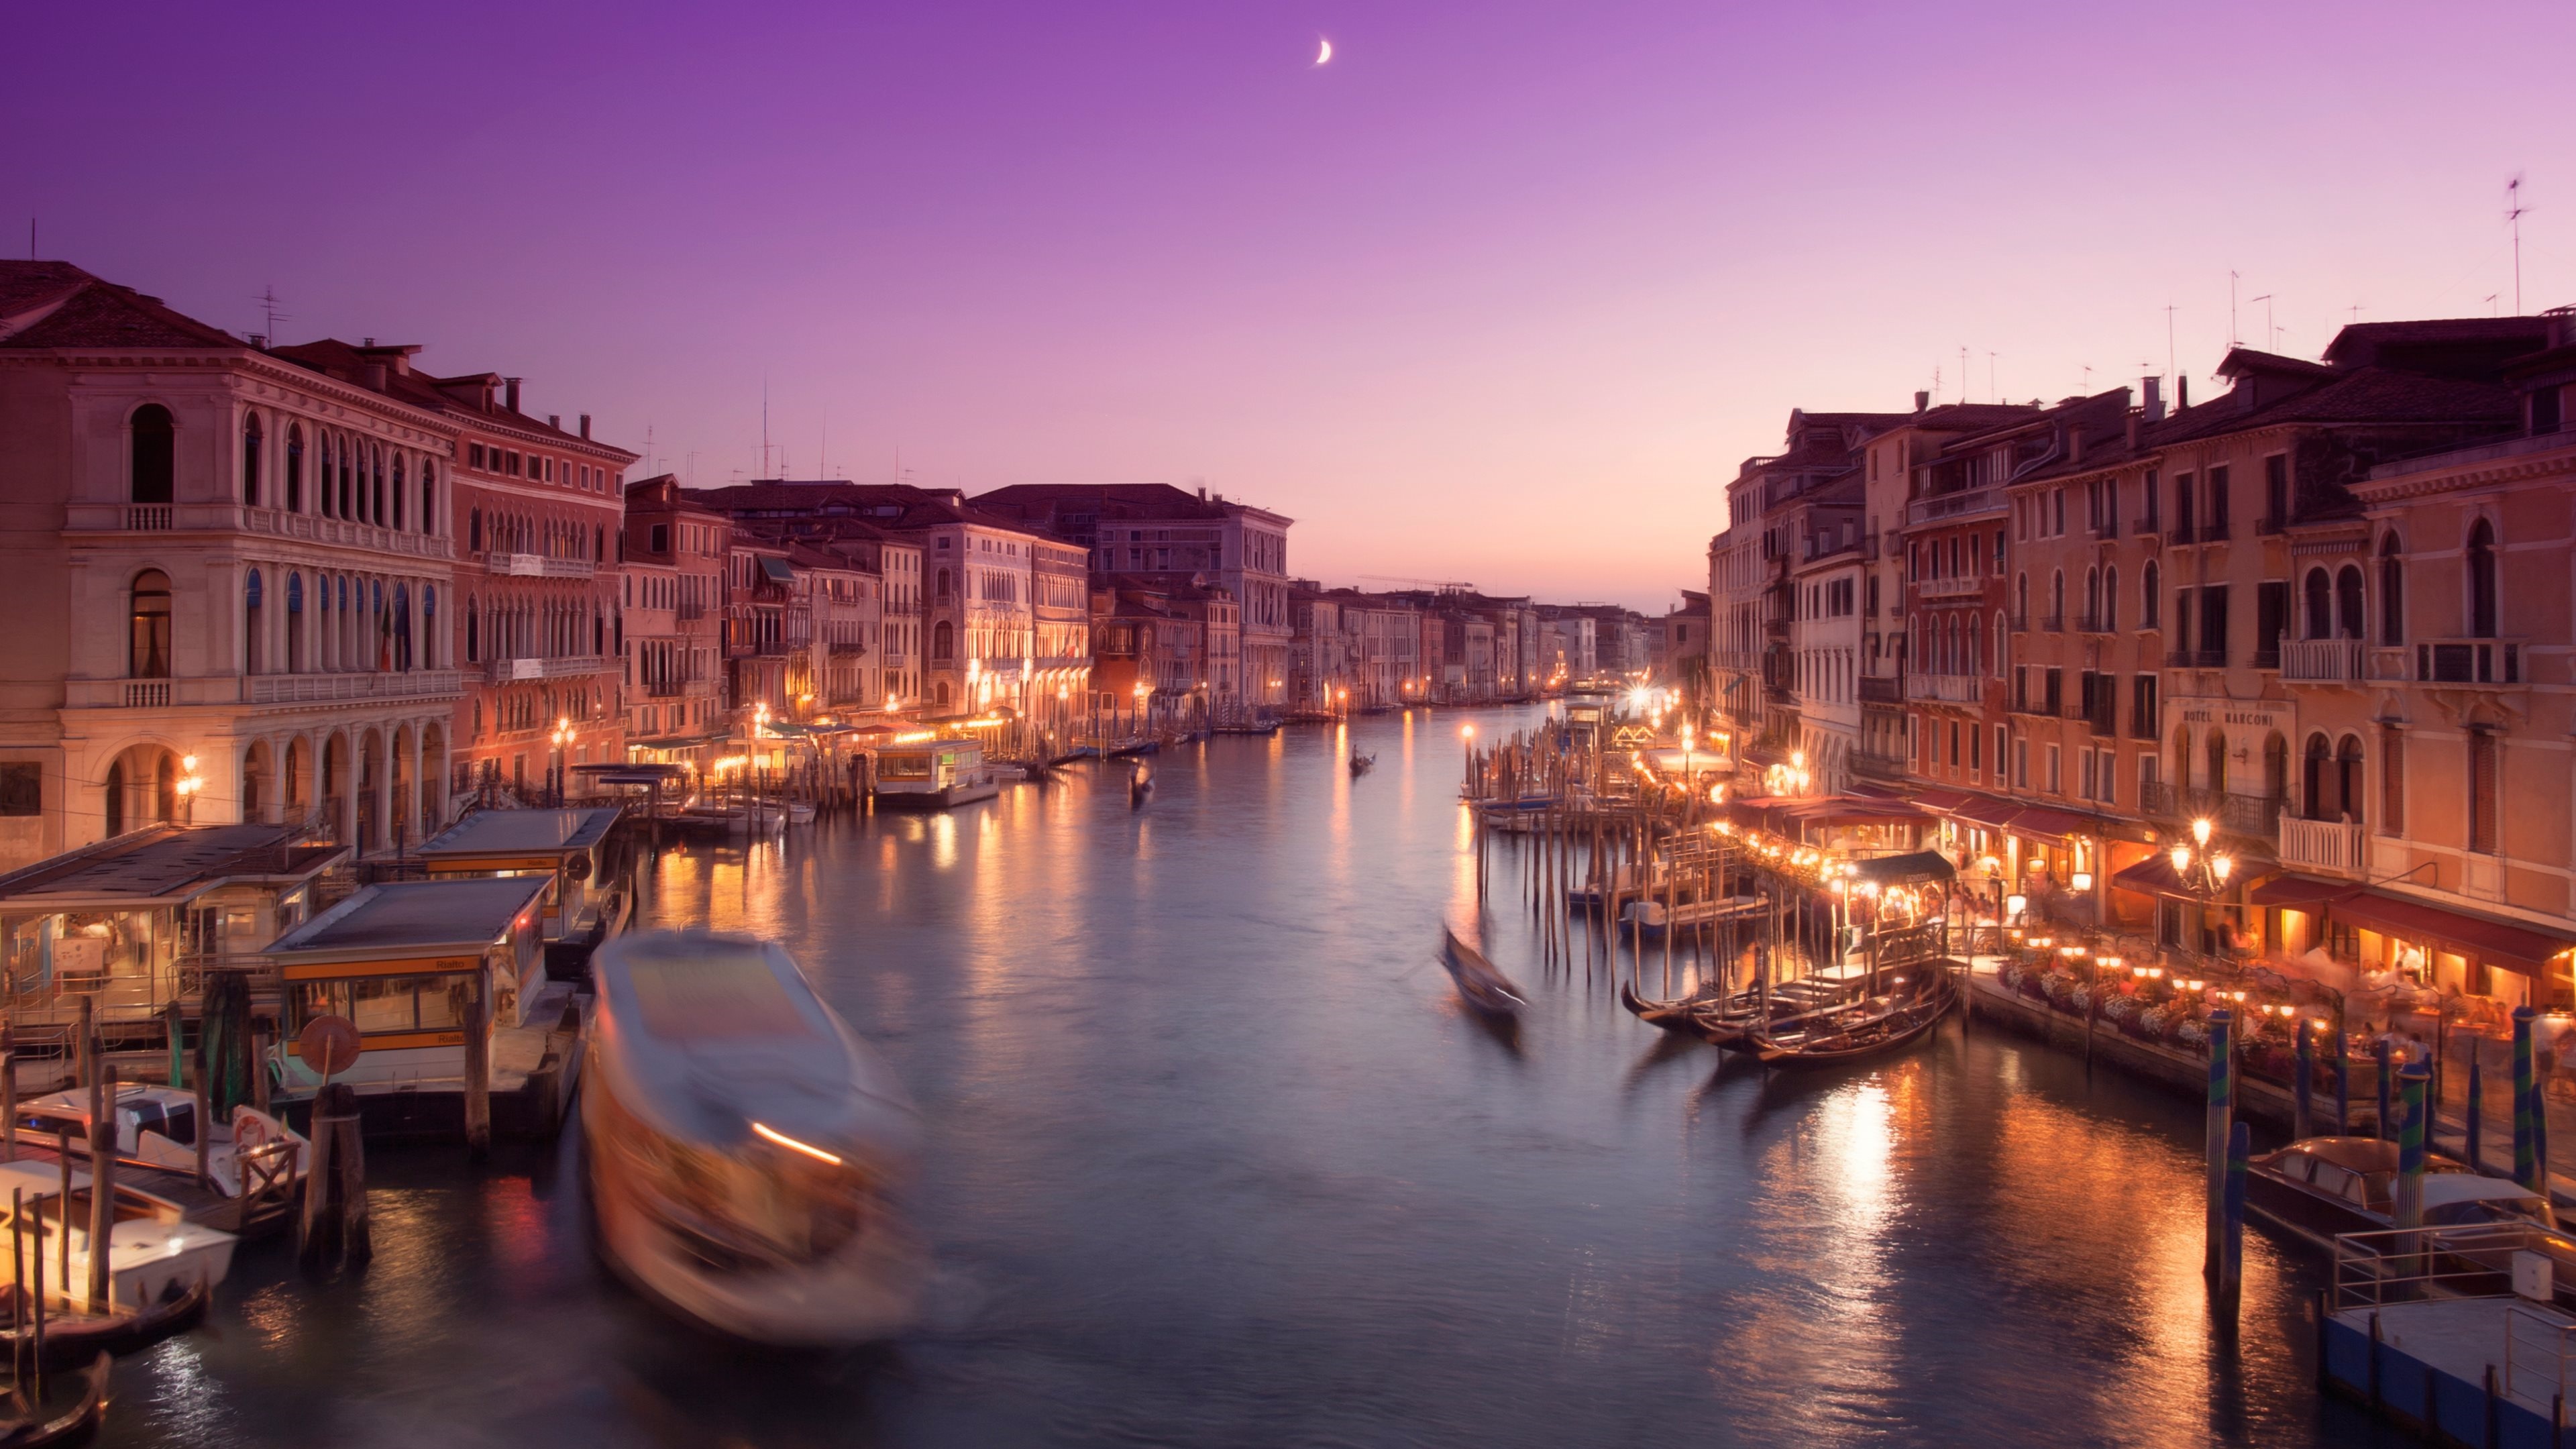 Venice And The Grand Canal 4K UltraHD Wallpaper. Wallpaper Studio